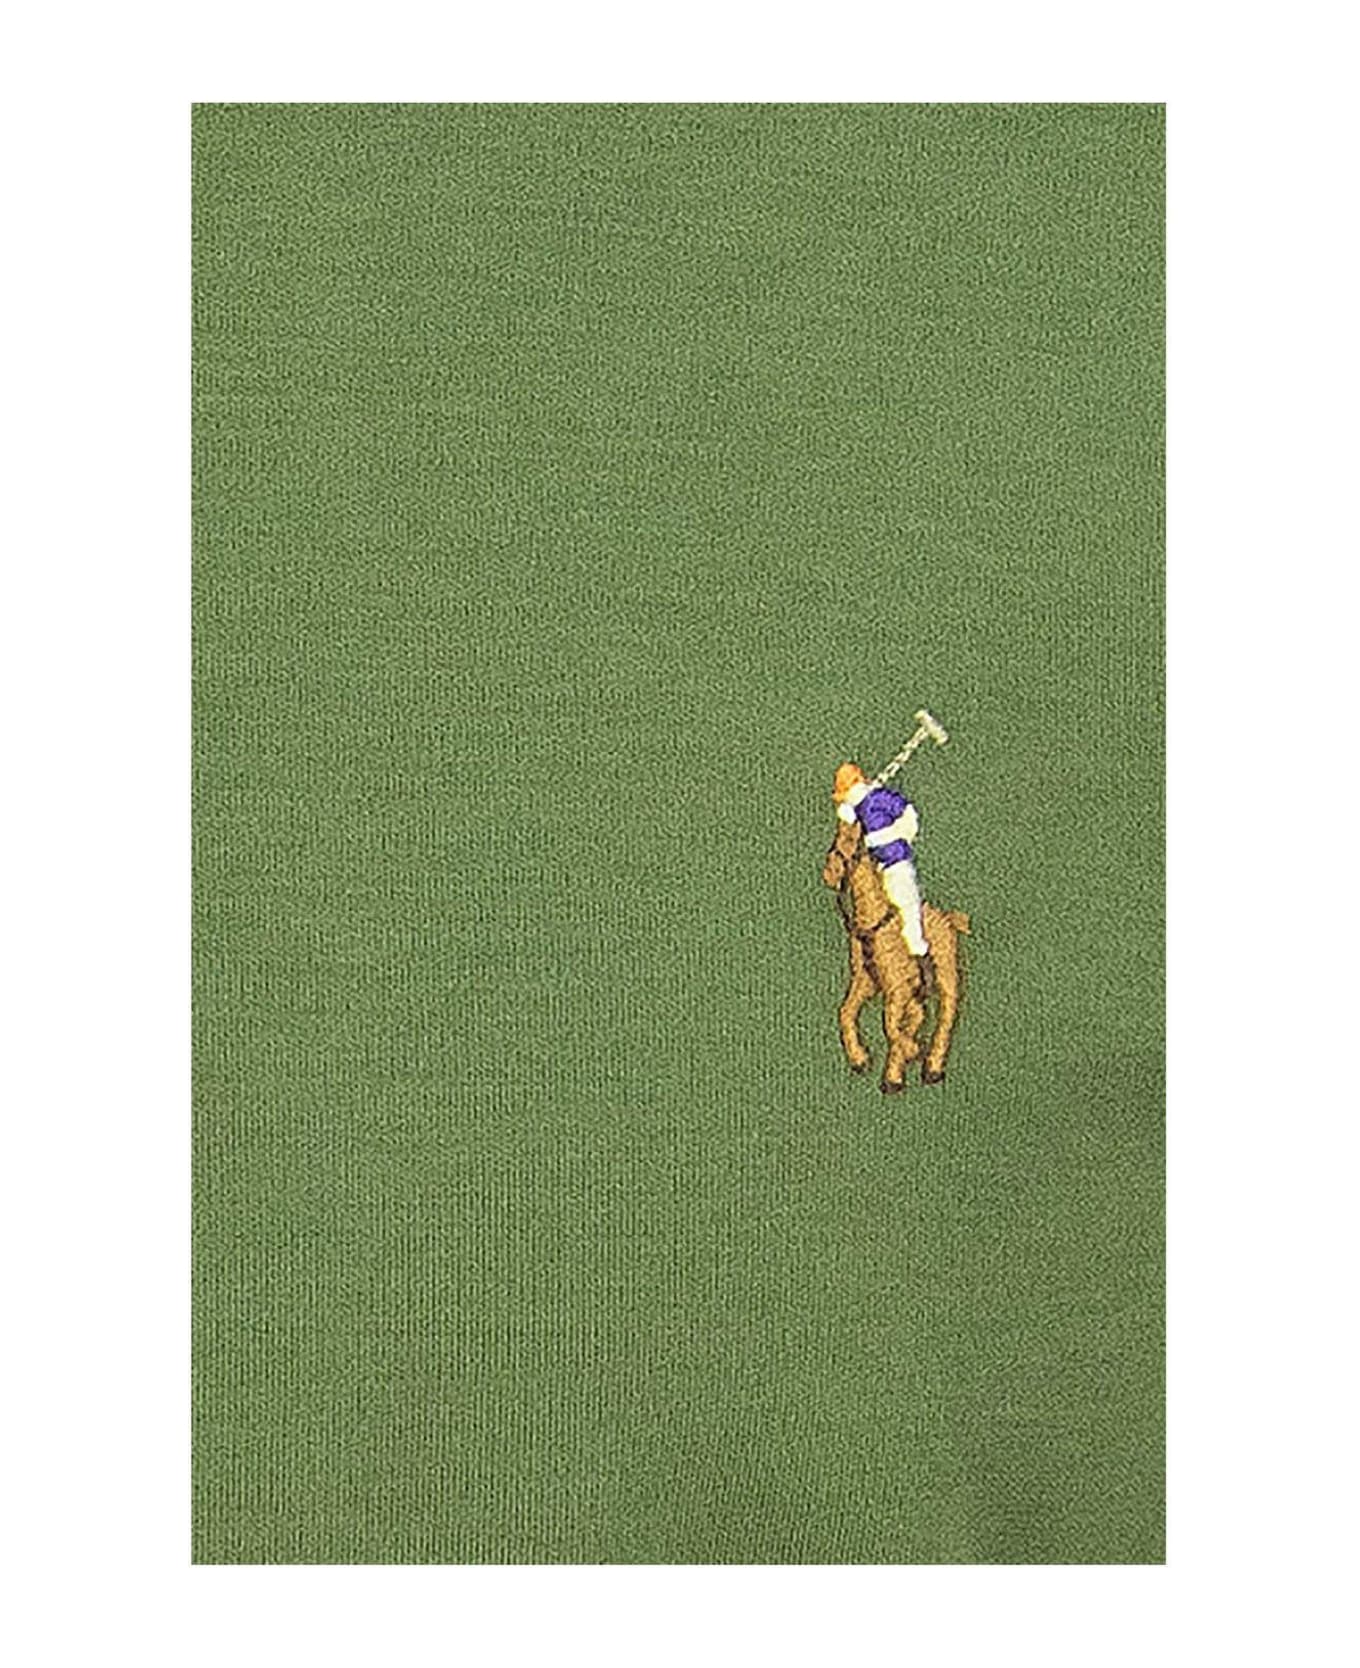 Polo Ralph Lauren Logo Embroidered Polo Shirt - Green シャツ